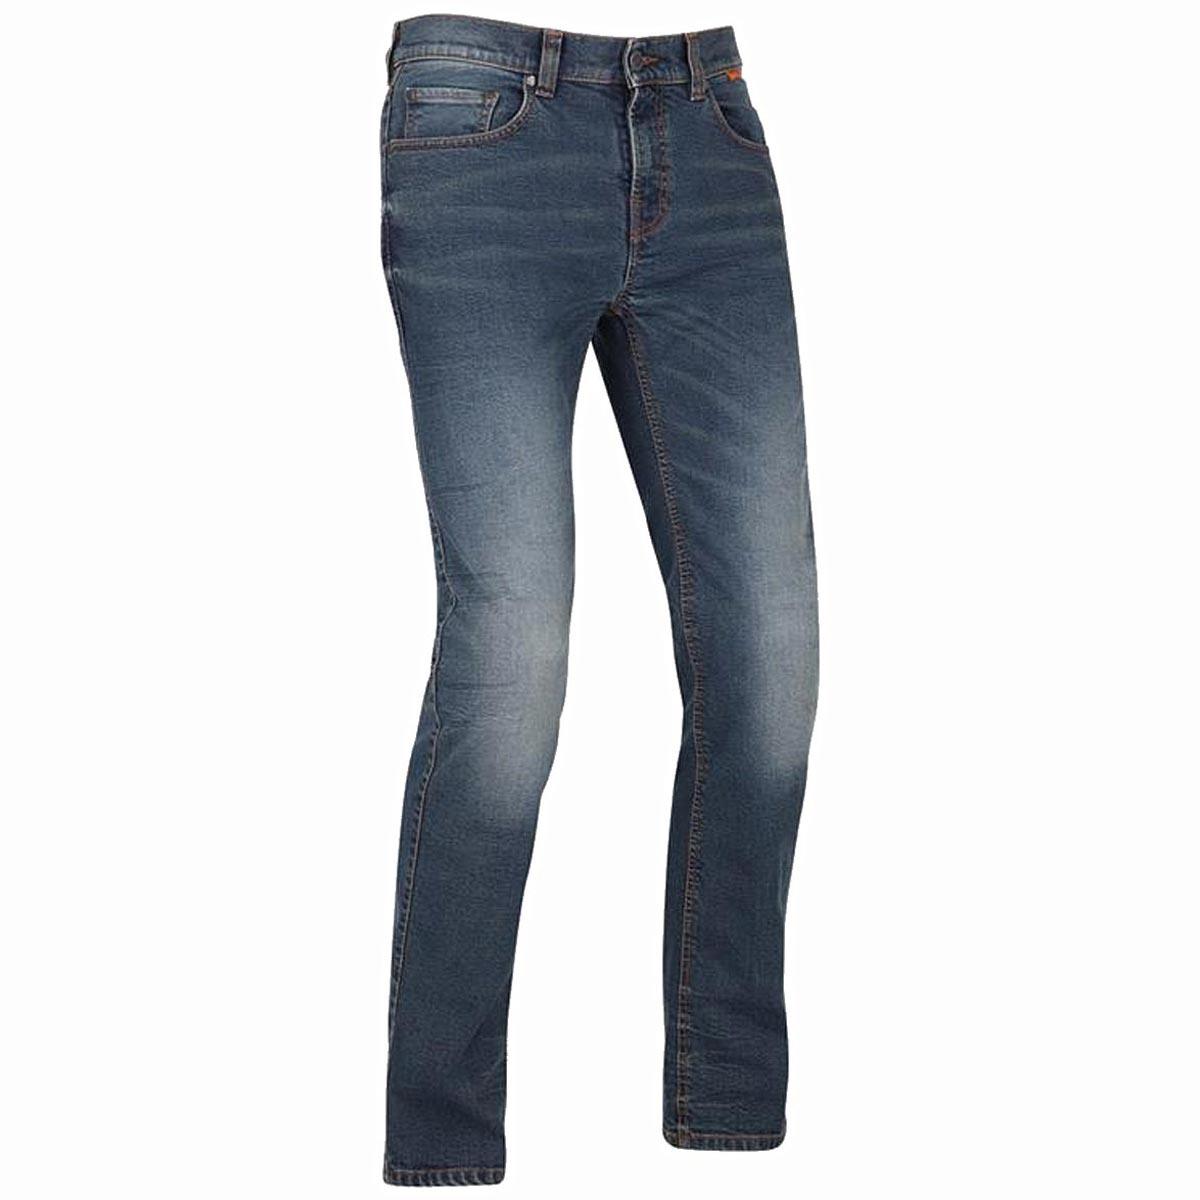 Richa Original 2 Straight Cut Jeans Washed Blue 32in Leg 44in Waist